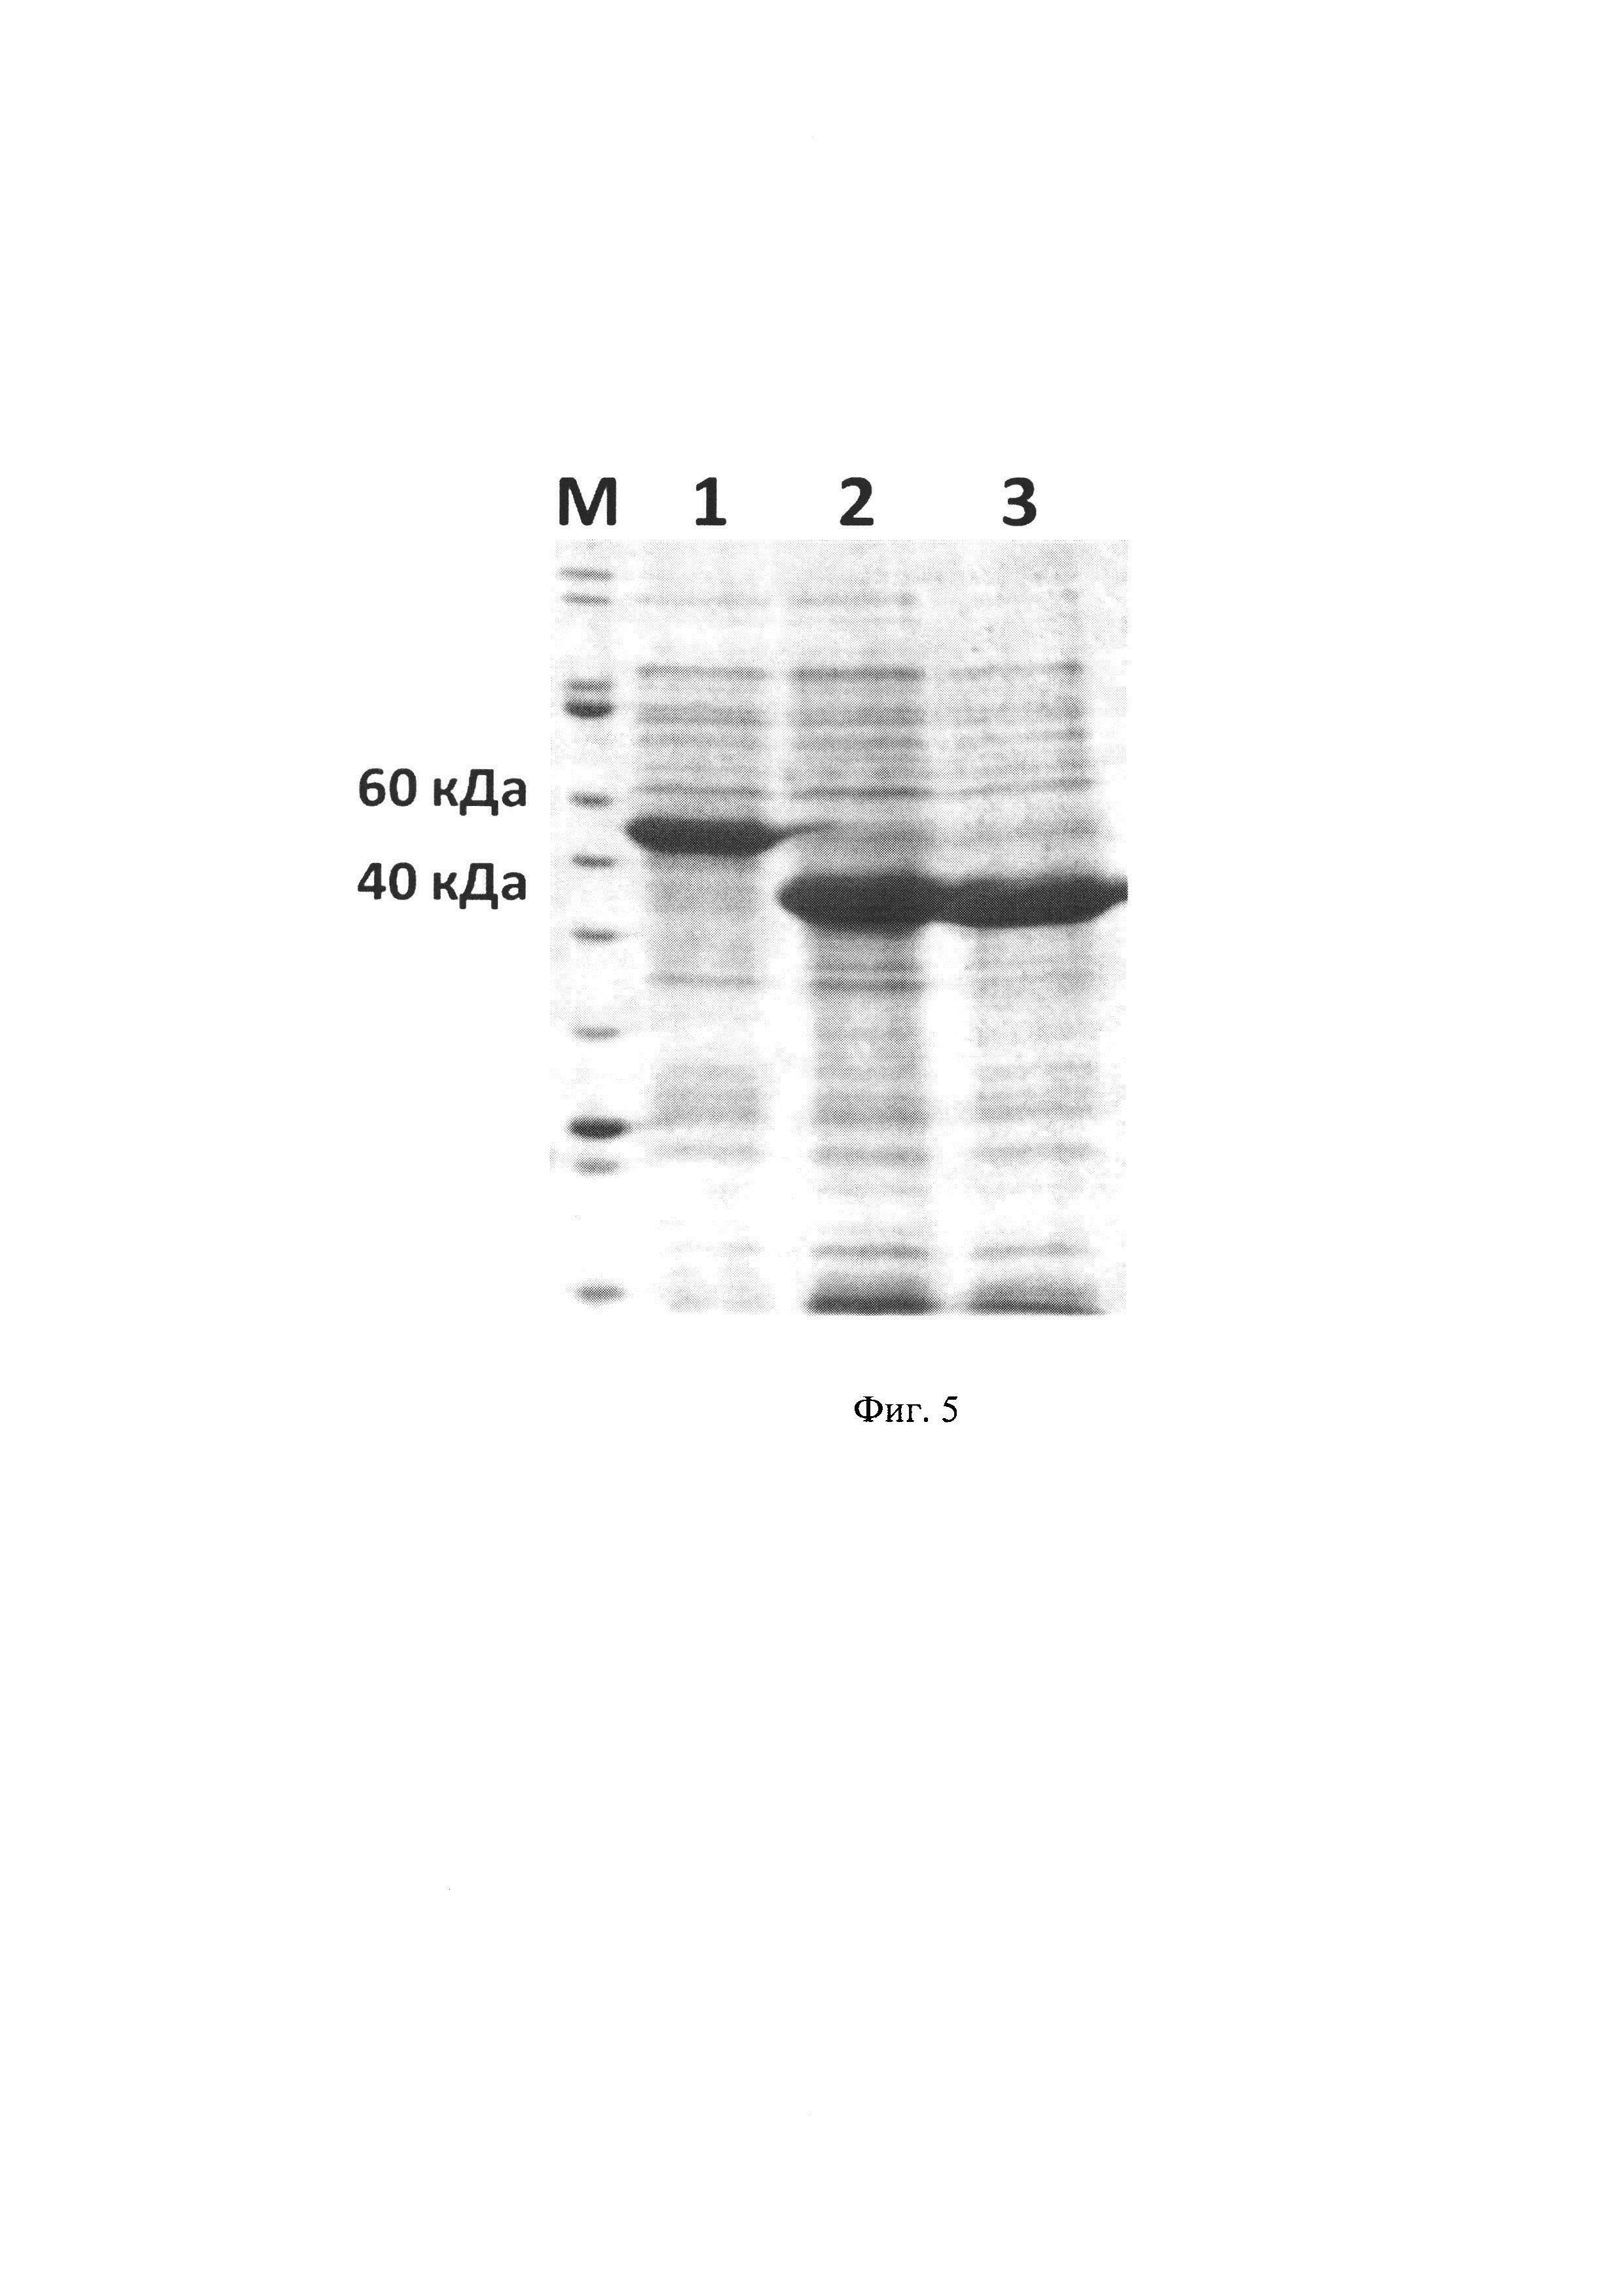 Рекомбинантная плазмида pET32-Trex Vic, обеспечивающая синтез химерного белка прохимозина Vicugna pacos, и штамм Escherichia coli BL21(DE3)pLysE pET32-Trx Vic-продуцент химерного белка прохимозина Vicugna pacos